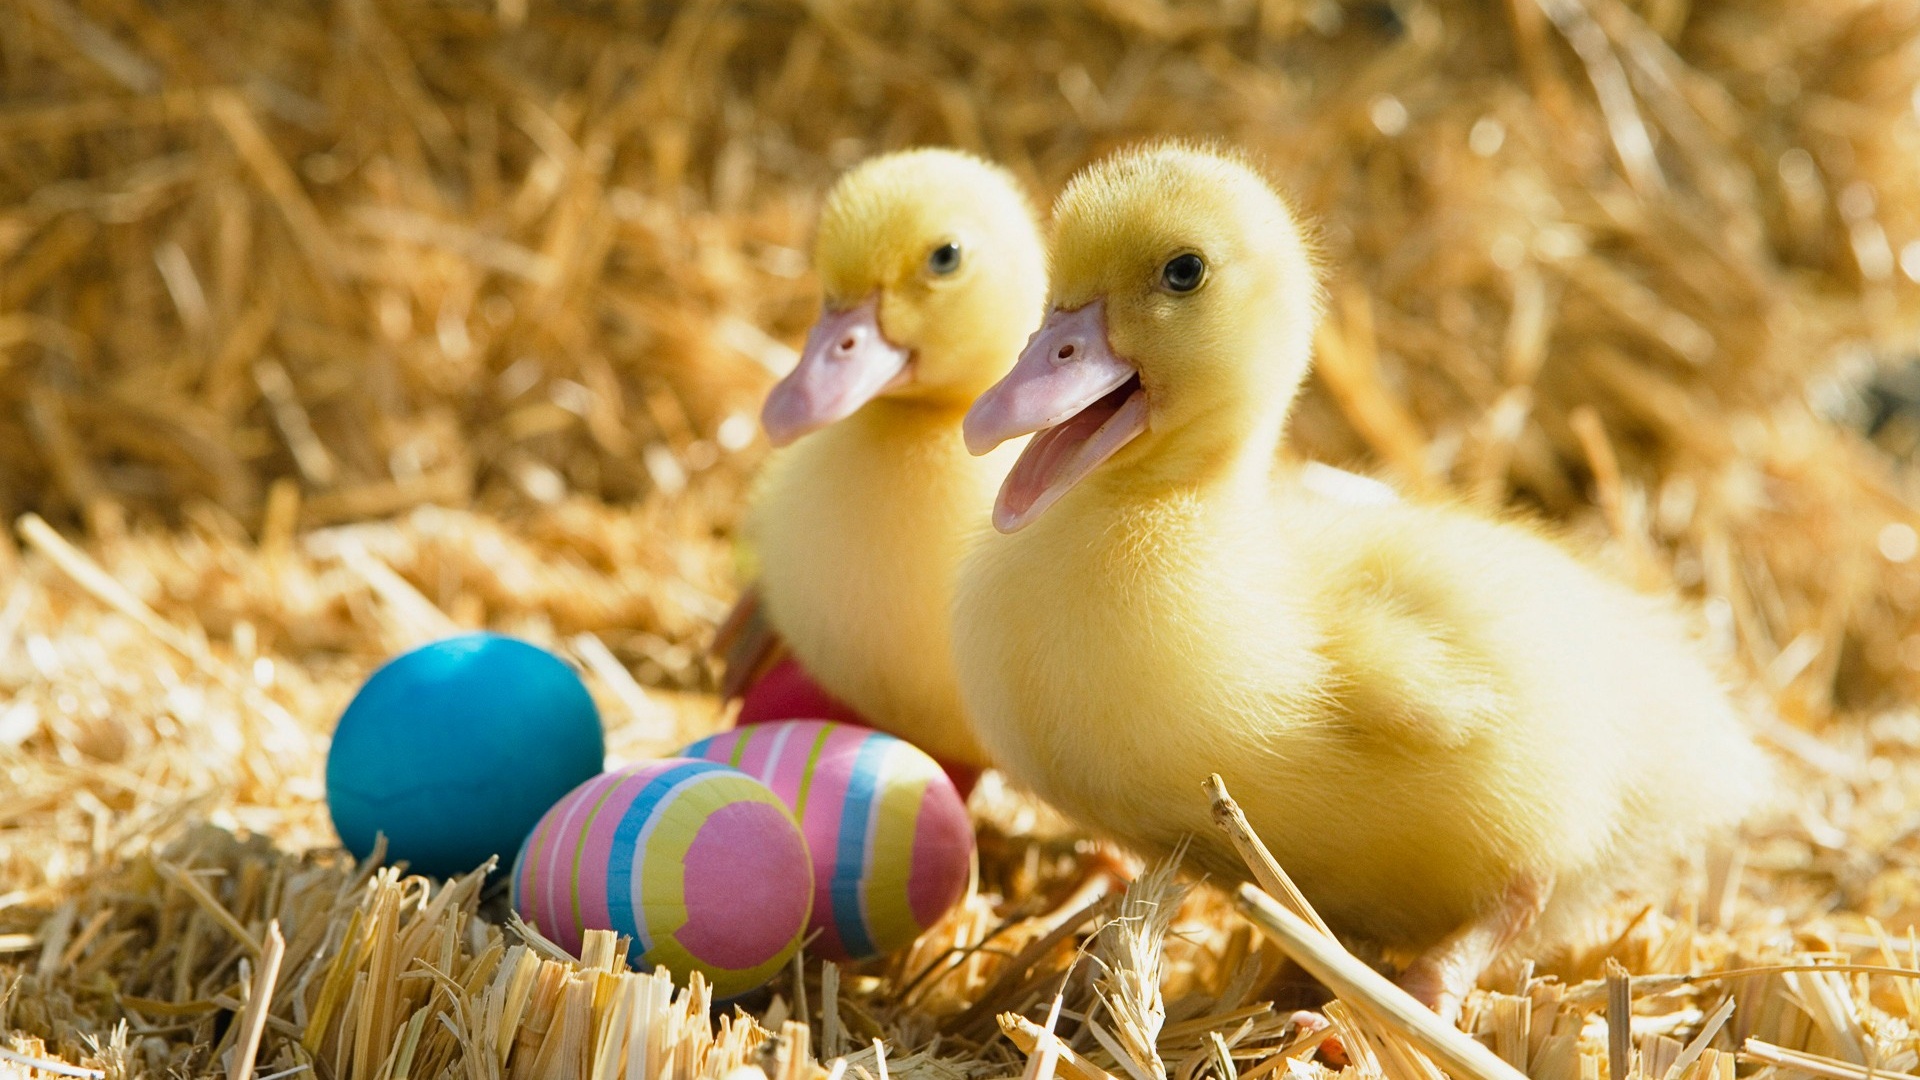 Ducklings And Easter Eggs Desktop Pc Mac Wallpaper